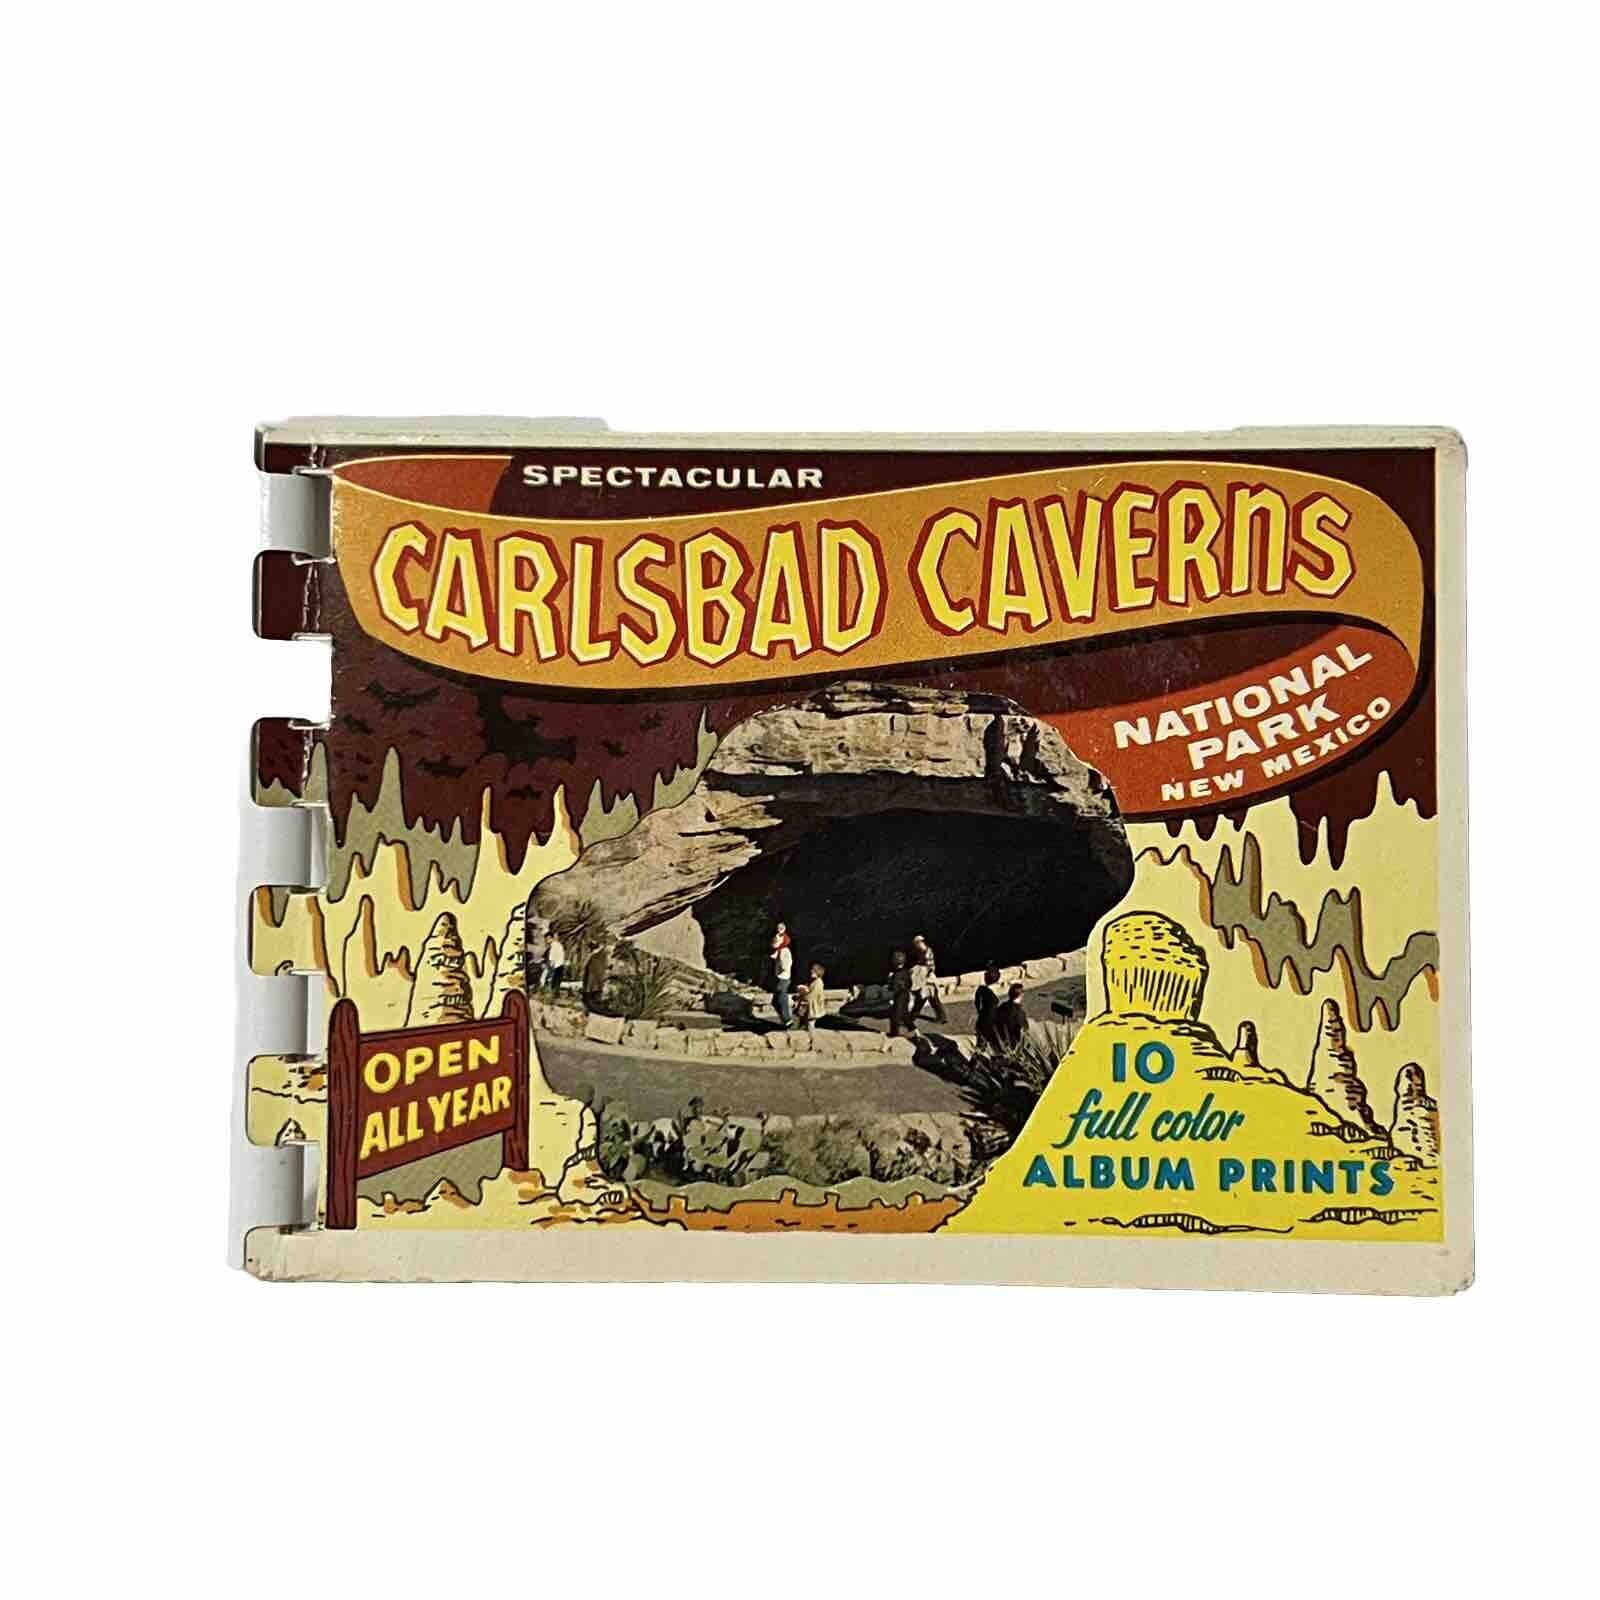 Vintage Carlsbad Caverns National Park New Mexico Souvenir Photo Album Booklet